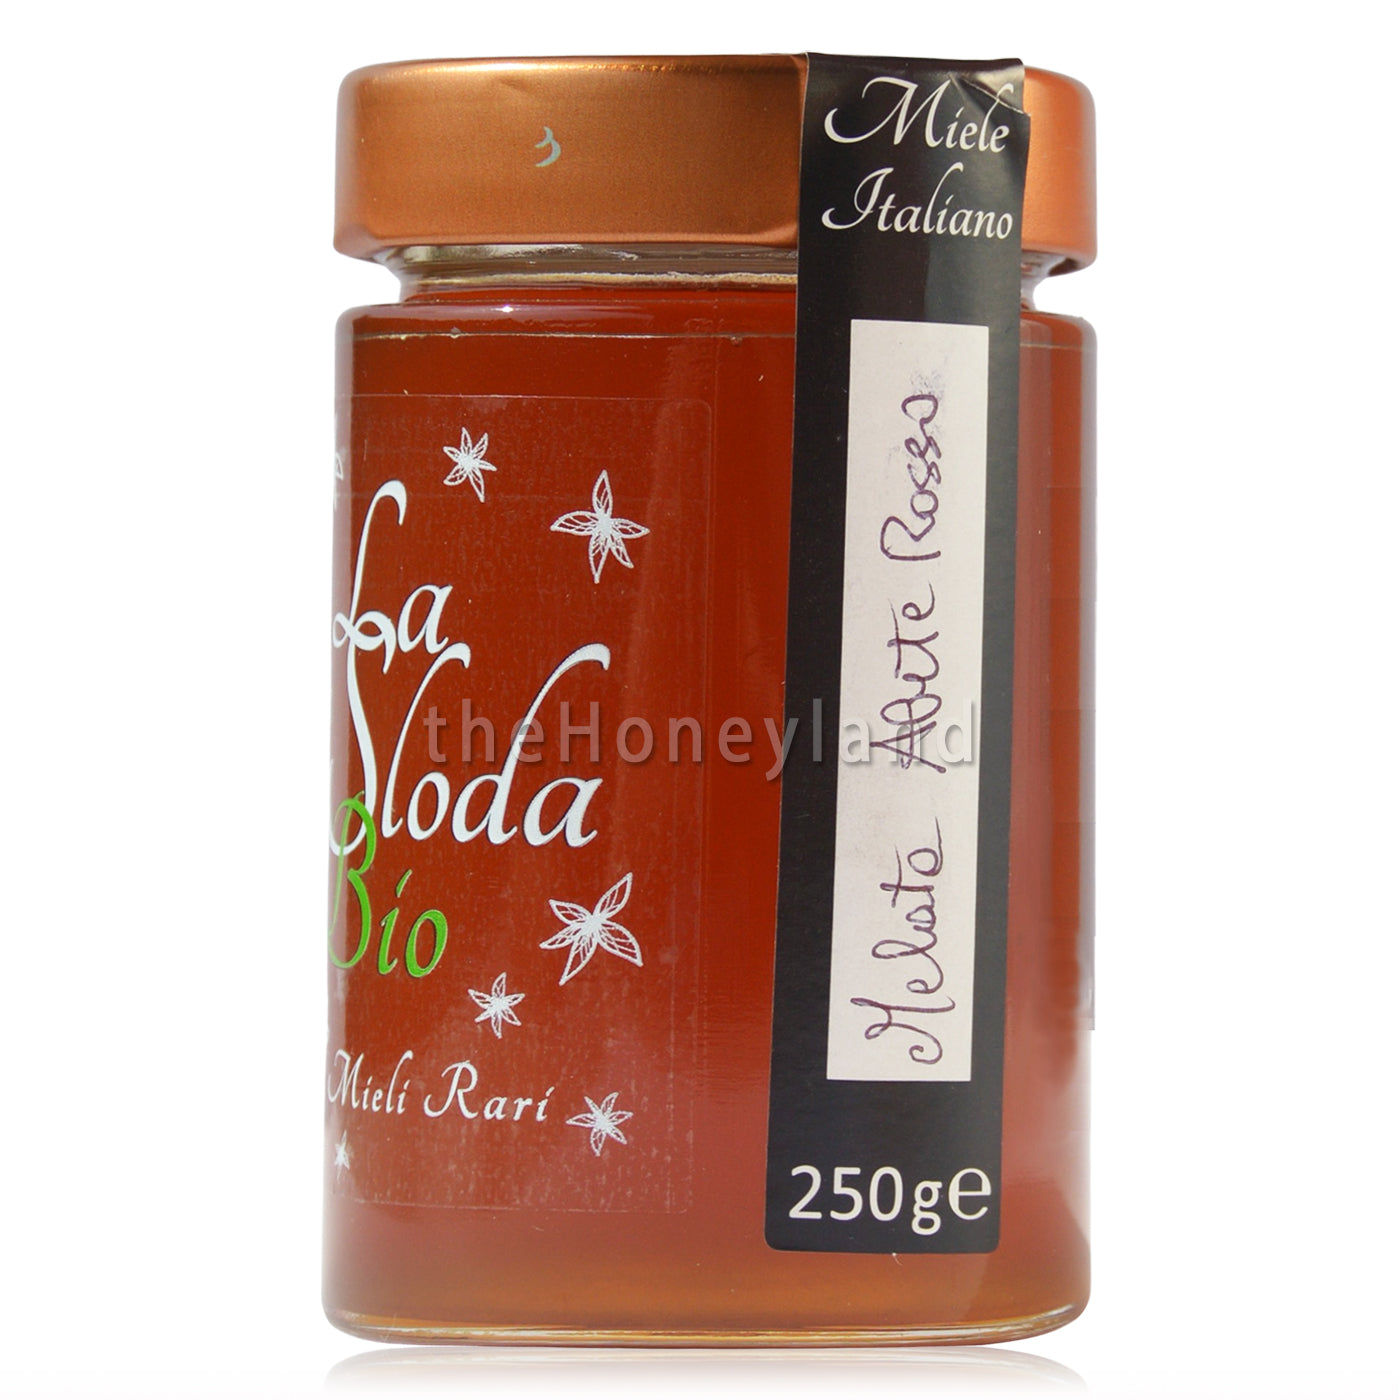 Spruce Honeydew Honey from Dolomiti Bellunesi Park